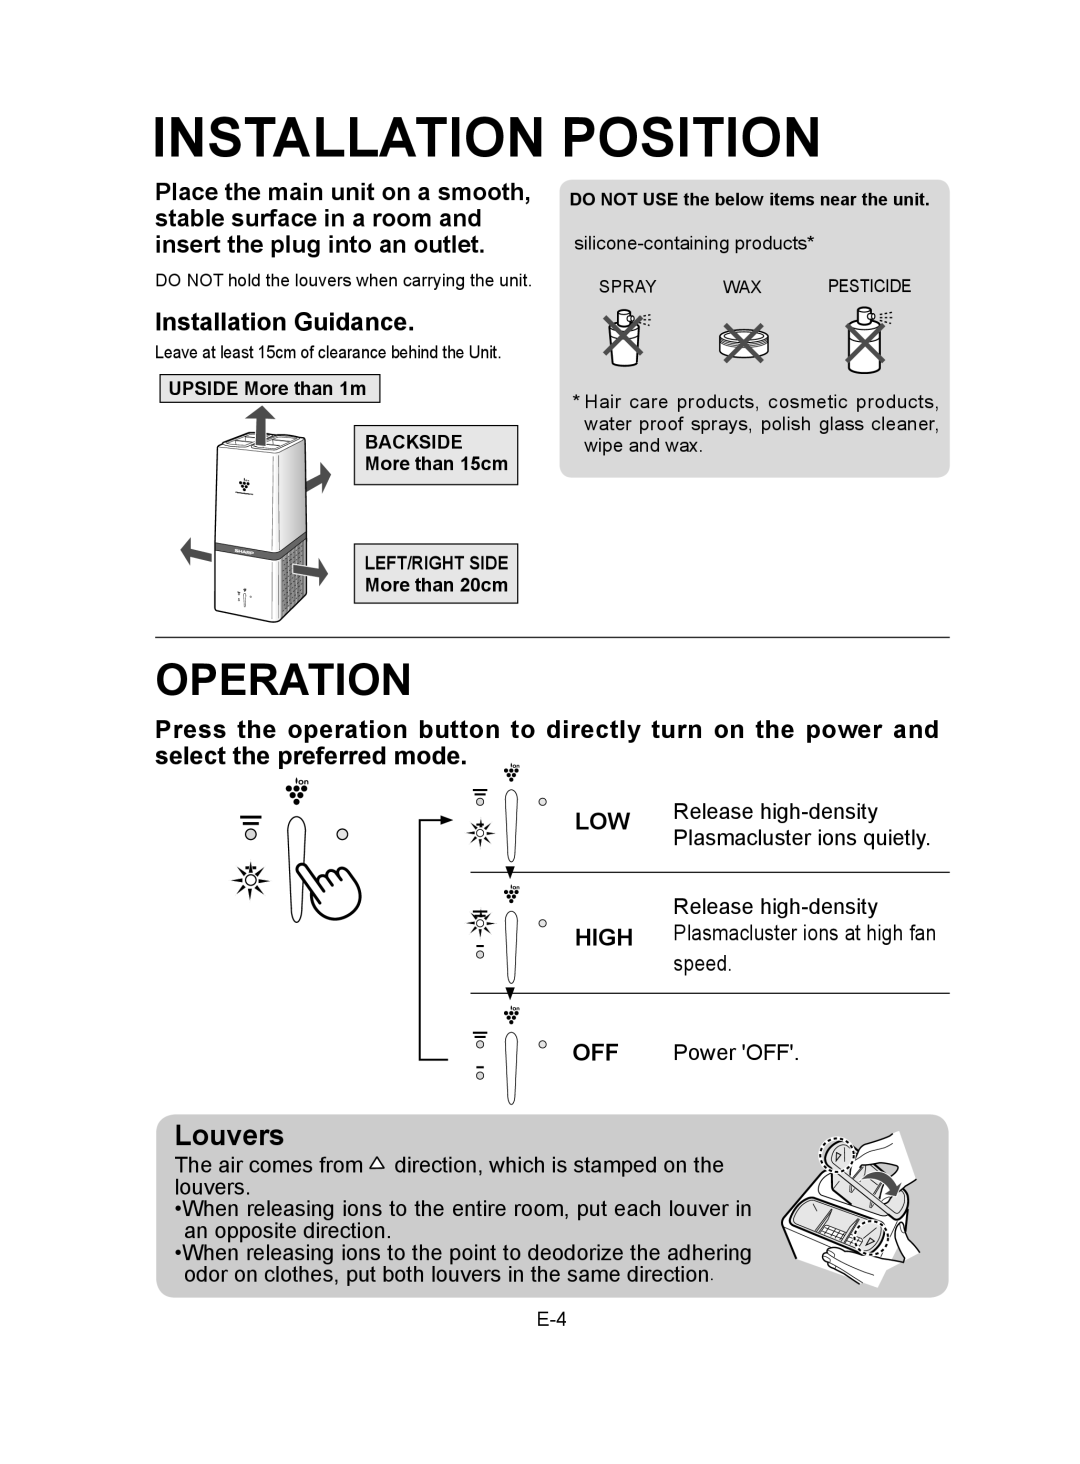 Sharp IG-A10EK operation manual Installation Position, Operation, Louvers 